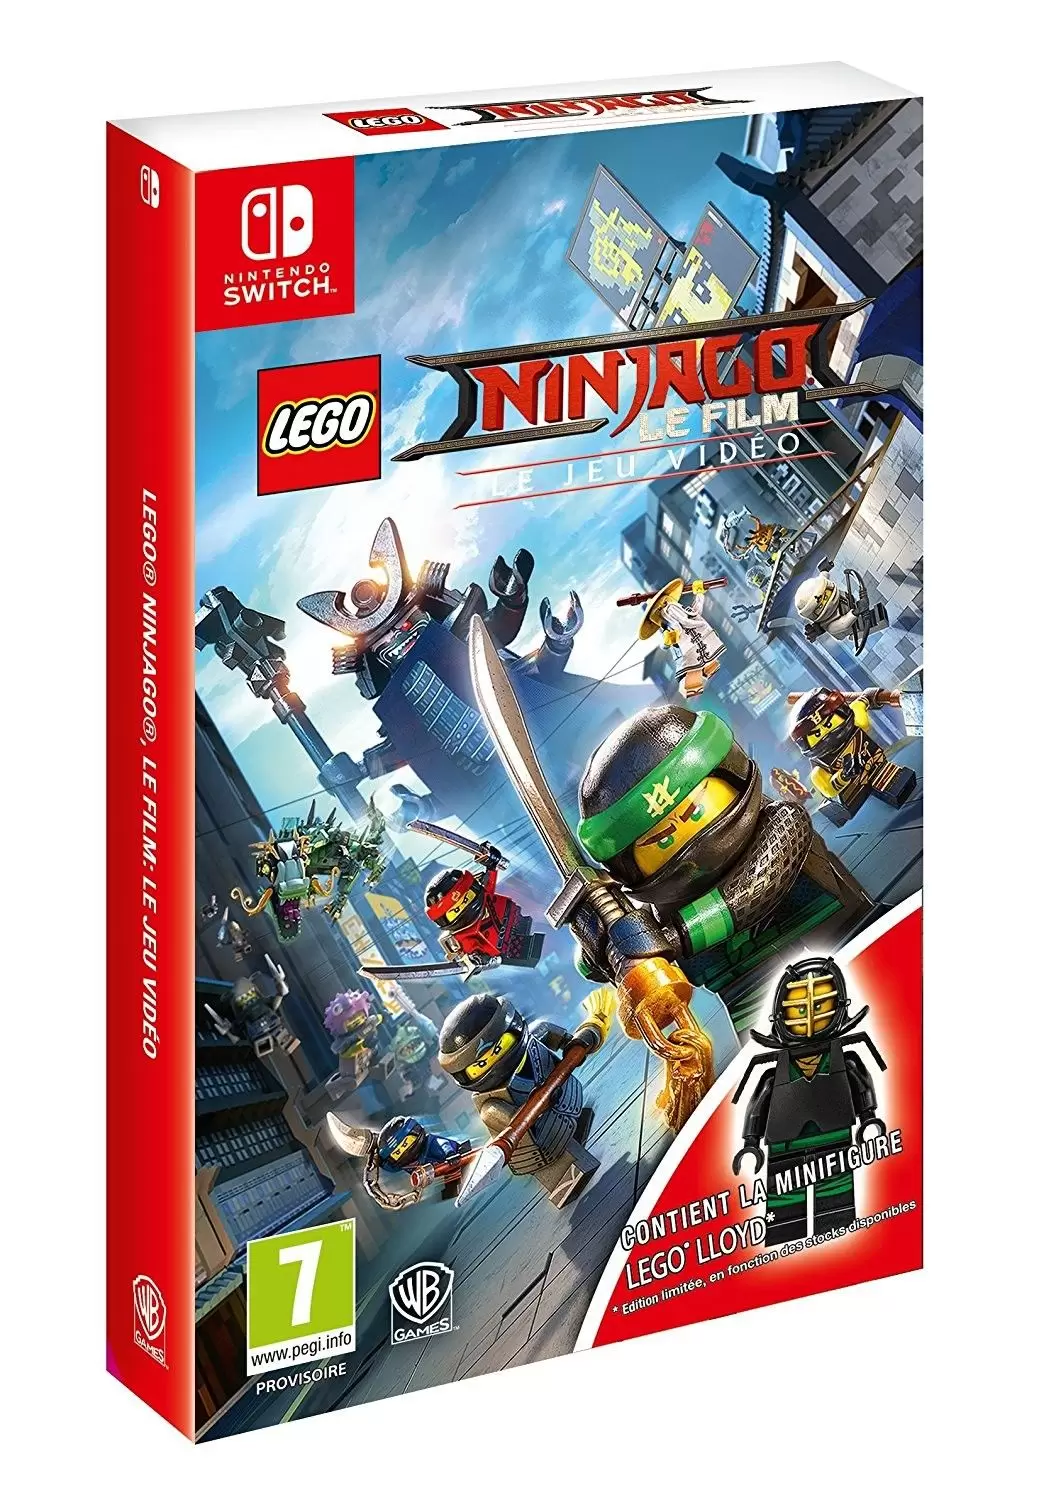 Nintendo Switch Games - LEGO Ninjago Movie - Edition Day One